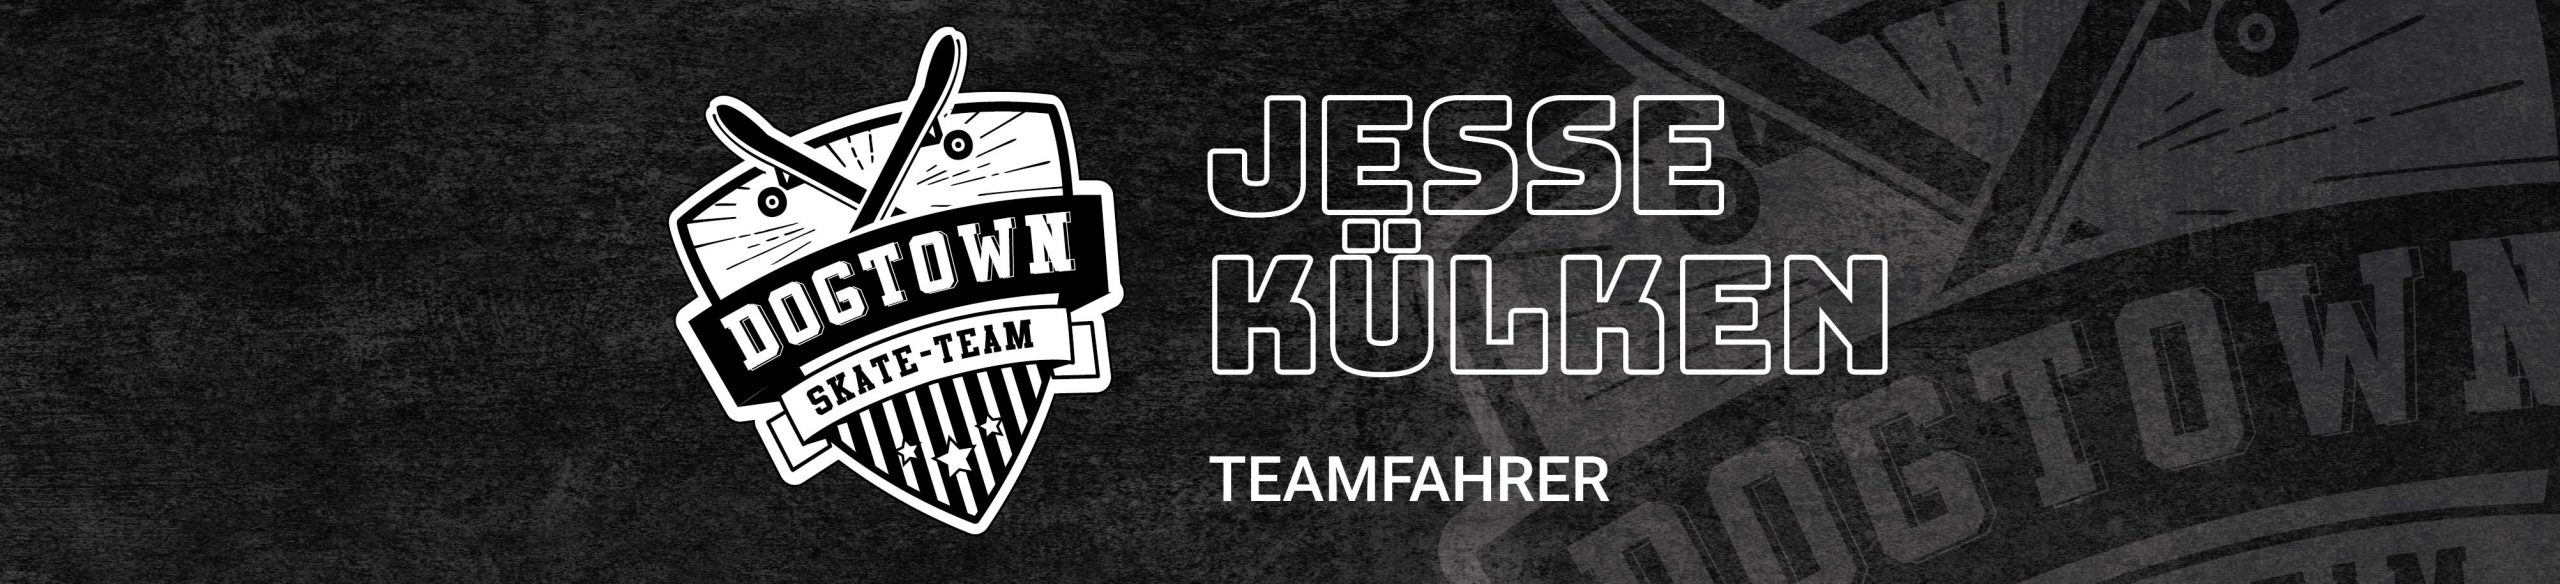 Jesse Külken Teamfahrer Dogtown-Skateteam